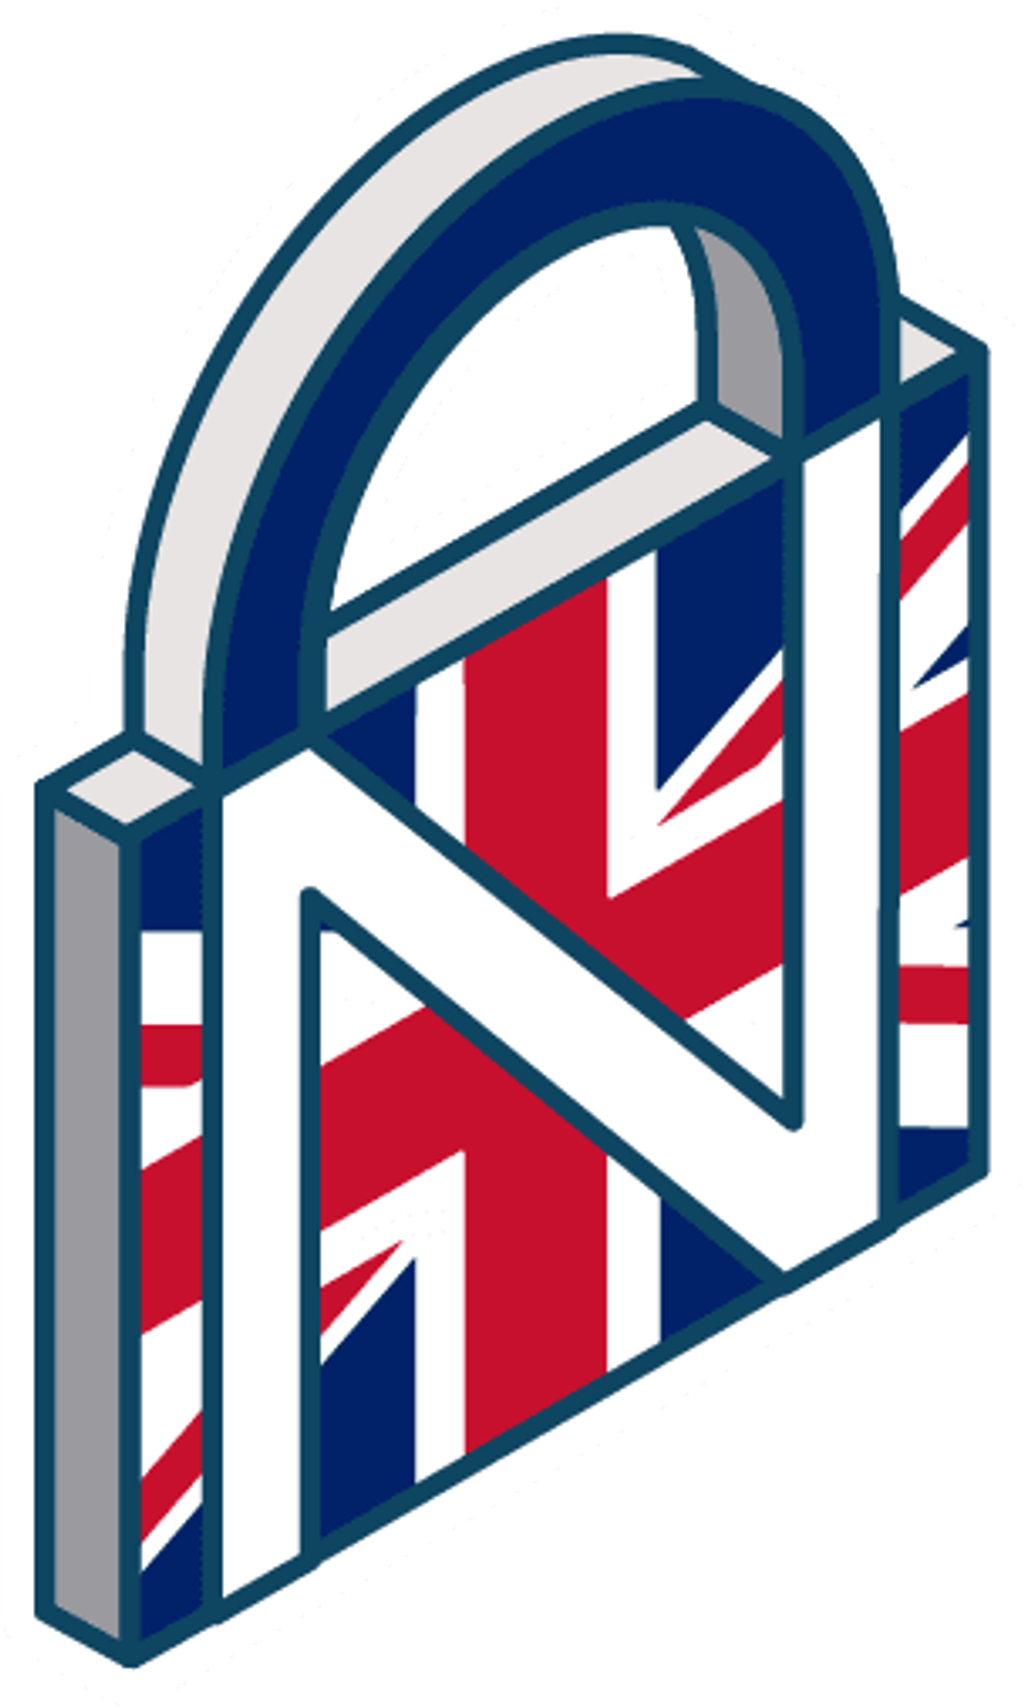 Logo in the shape of a lock representing Prighter's UK-NIS representation.